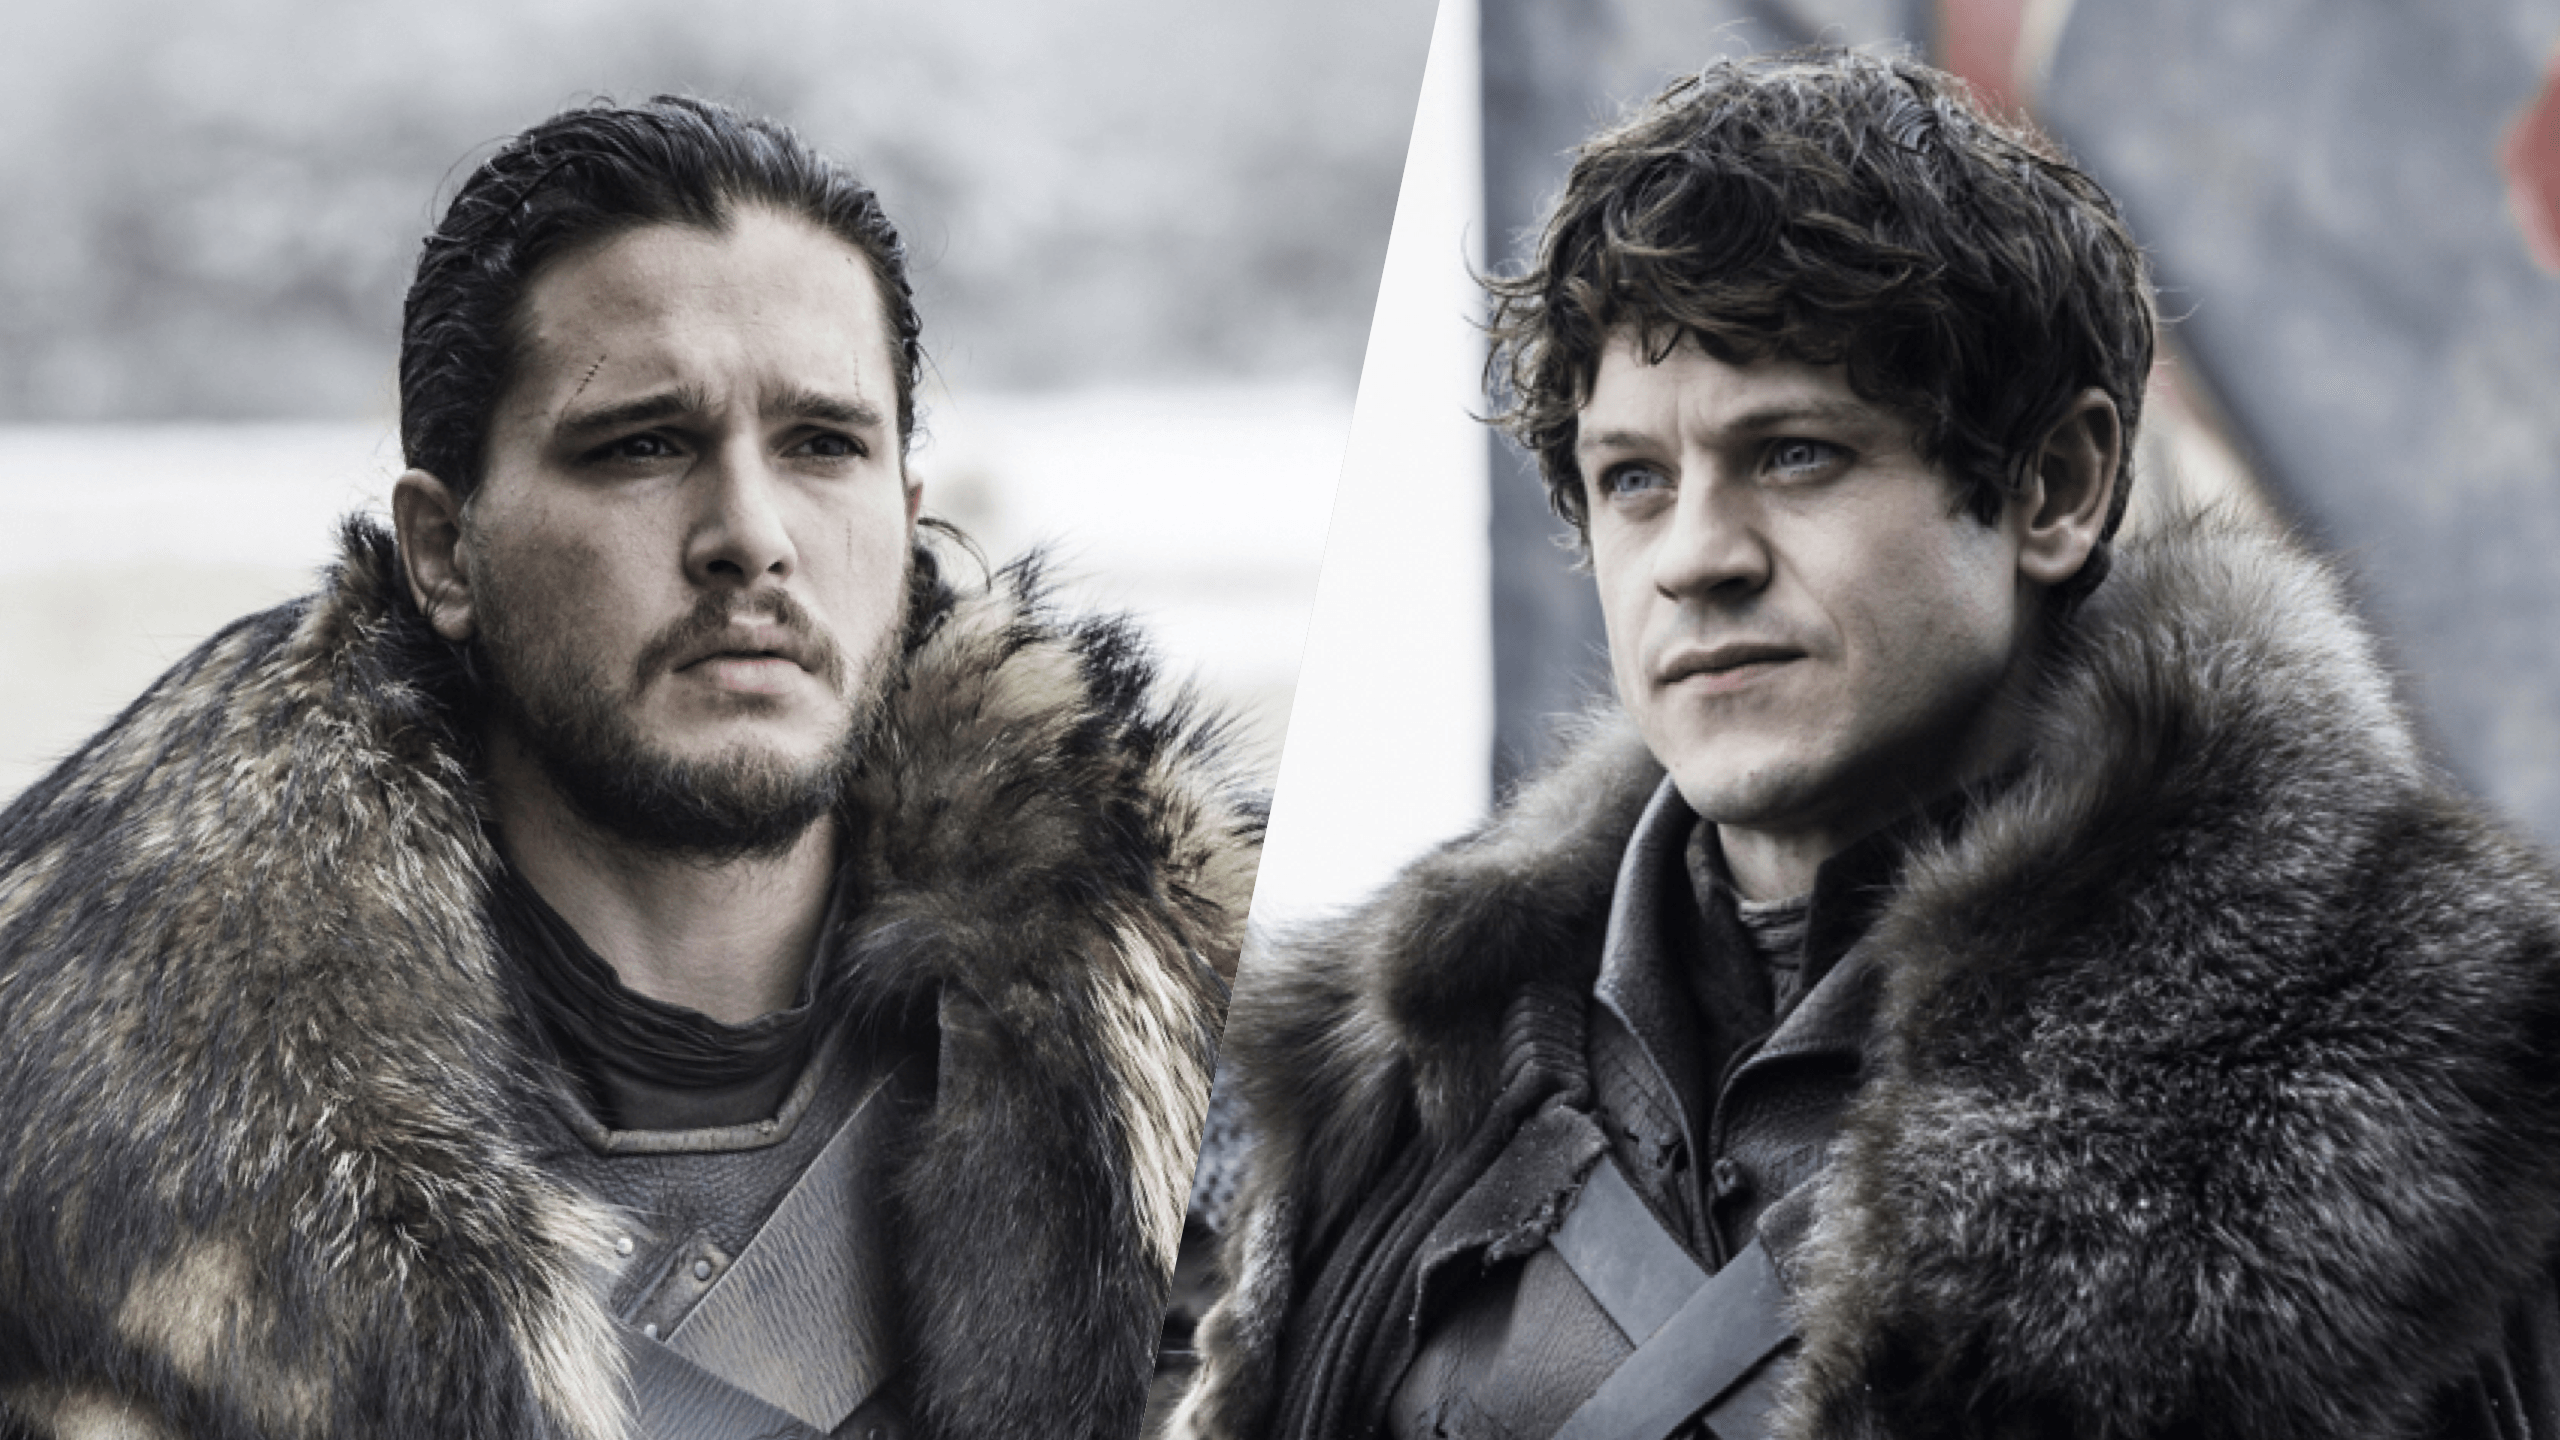 [IN PHOTOS] ‘Battle of the Bastards’: Epic Jon Snow, Ramsay Bolton showdown on ‘Game of Thrones’